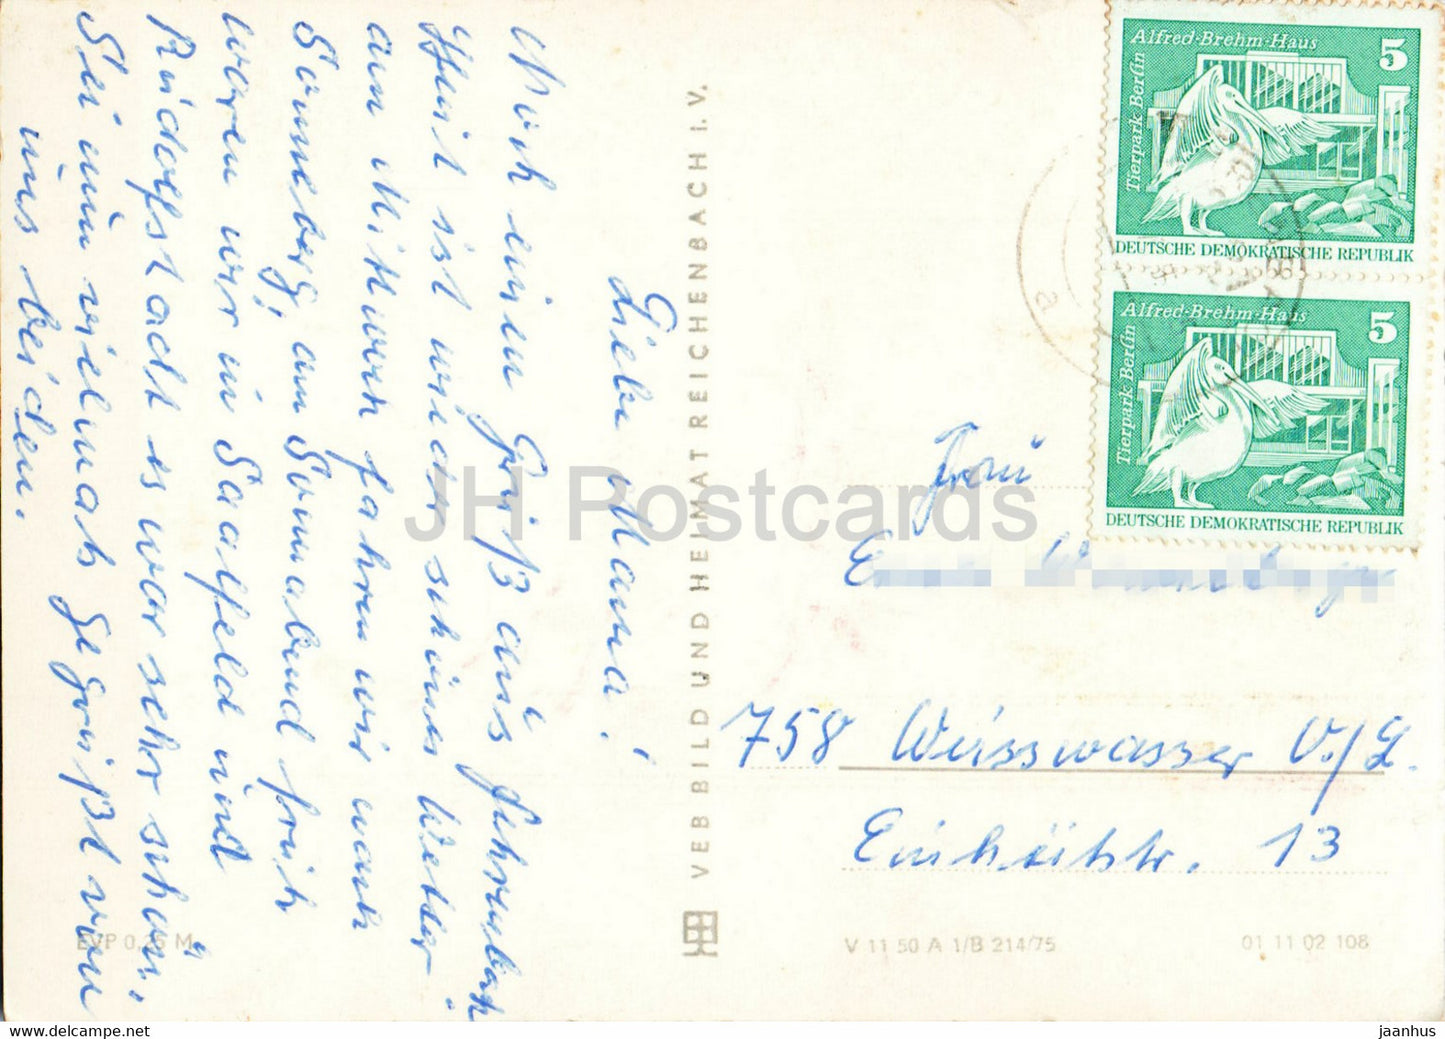 Hohenluftkurort Fehrenbach - Thur - 750 m - carte postale ancienne - Allemagne DDR - d'occasion